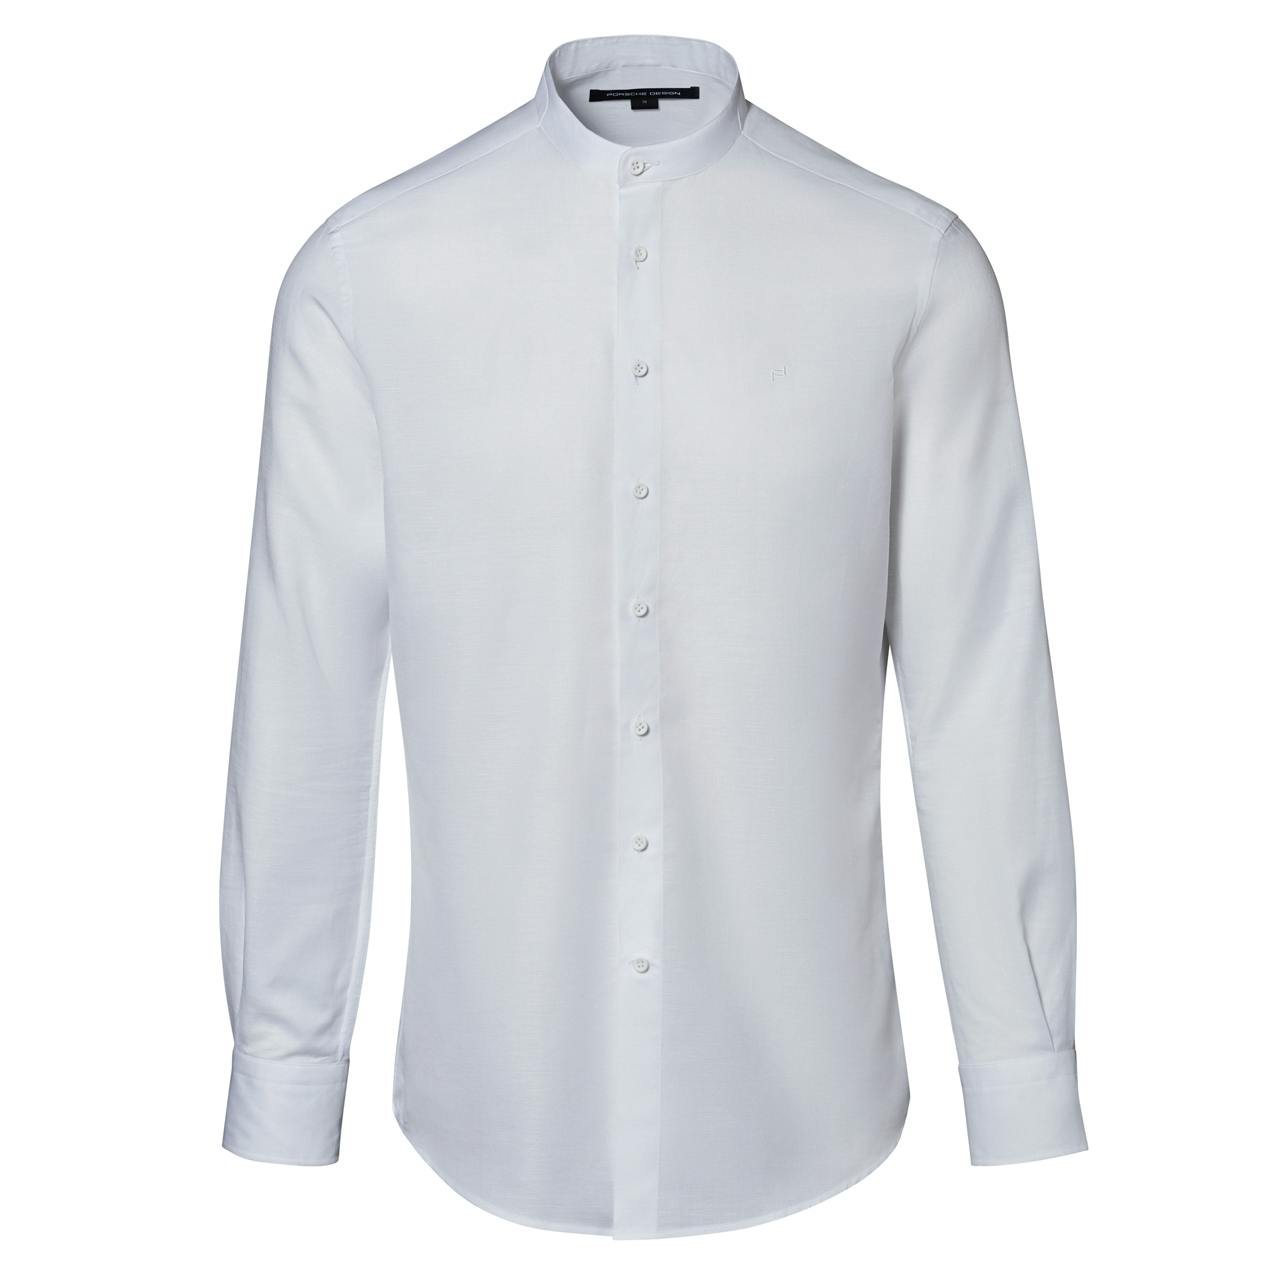 Porsche Design_SS20_M Stand Collar Shirt, Bright White, 138€